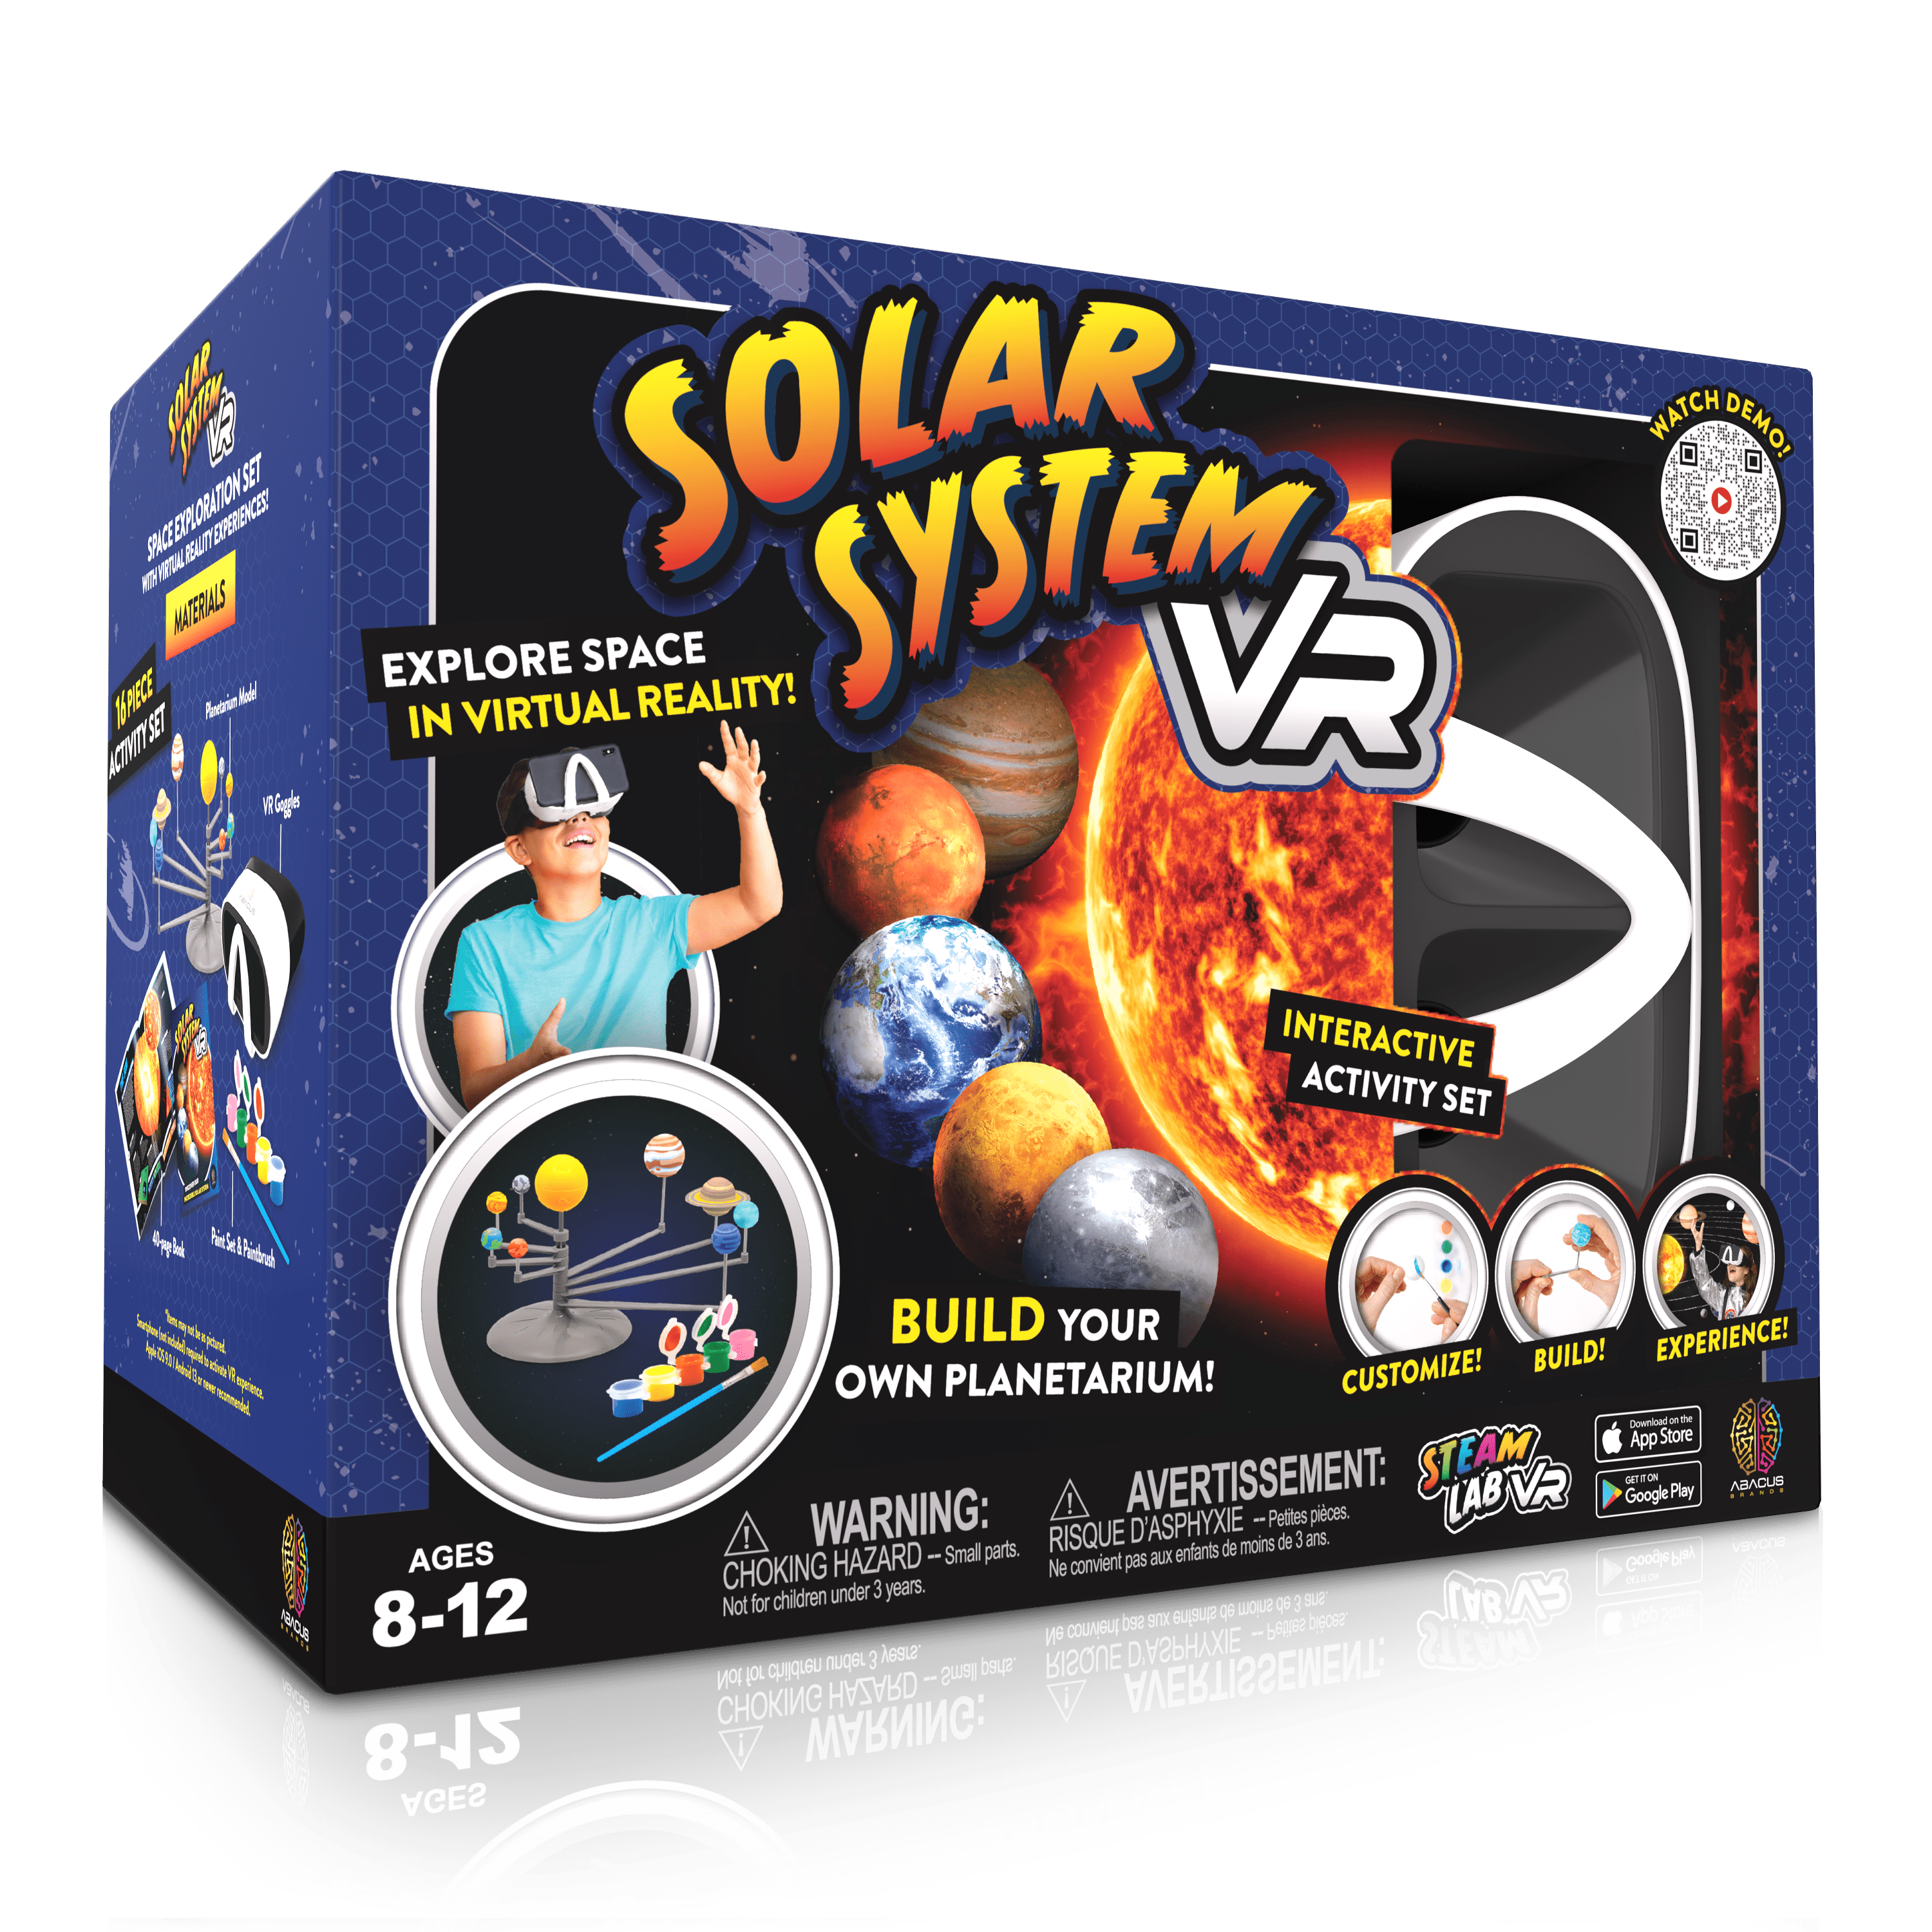 STEAM LAB VIRTUAL REALITY KIDS VR TOYS - SOLAR SYSTEM VR